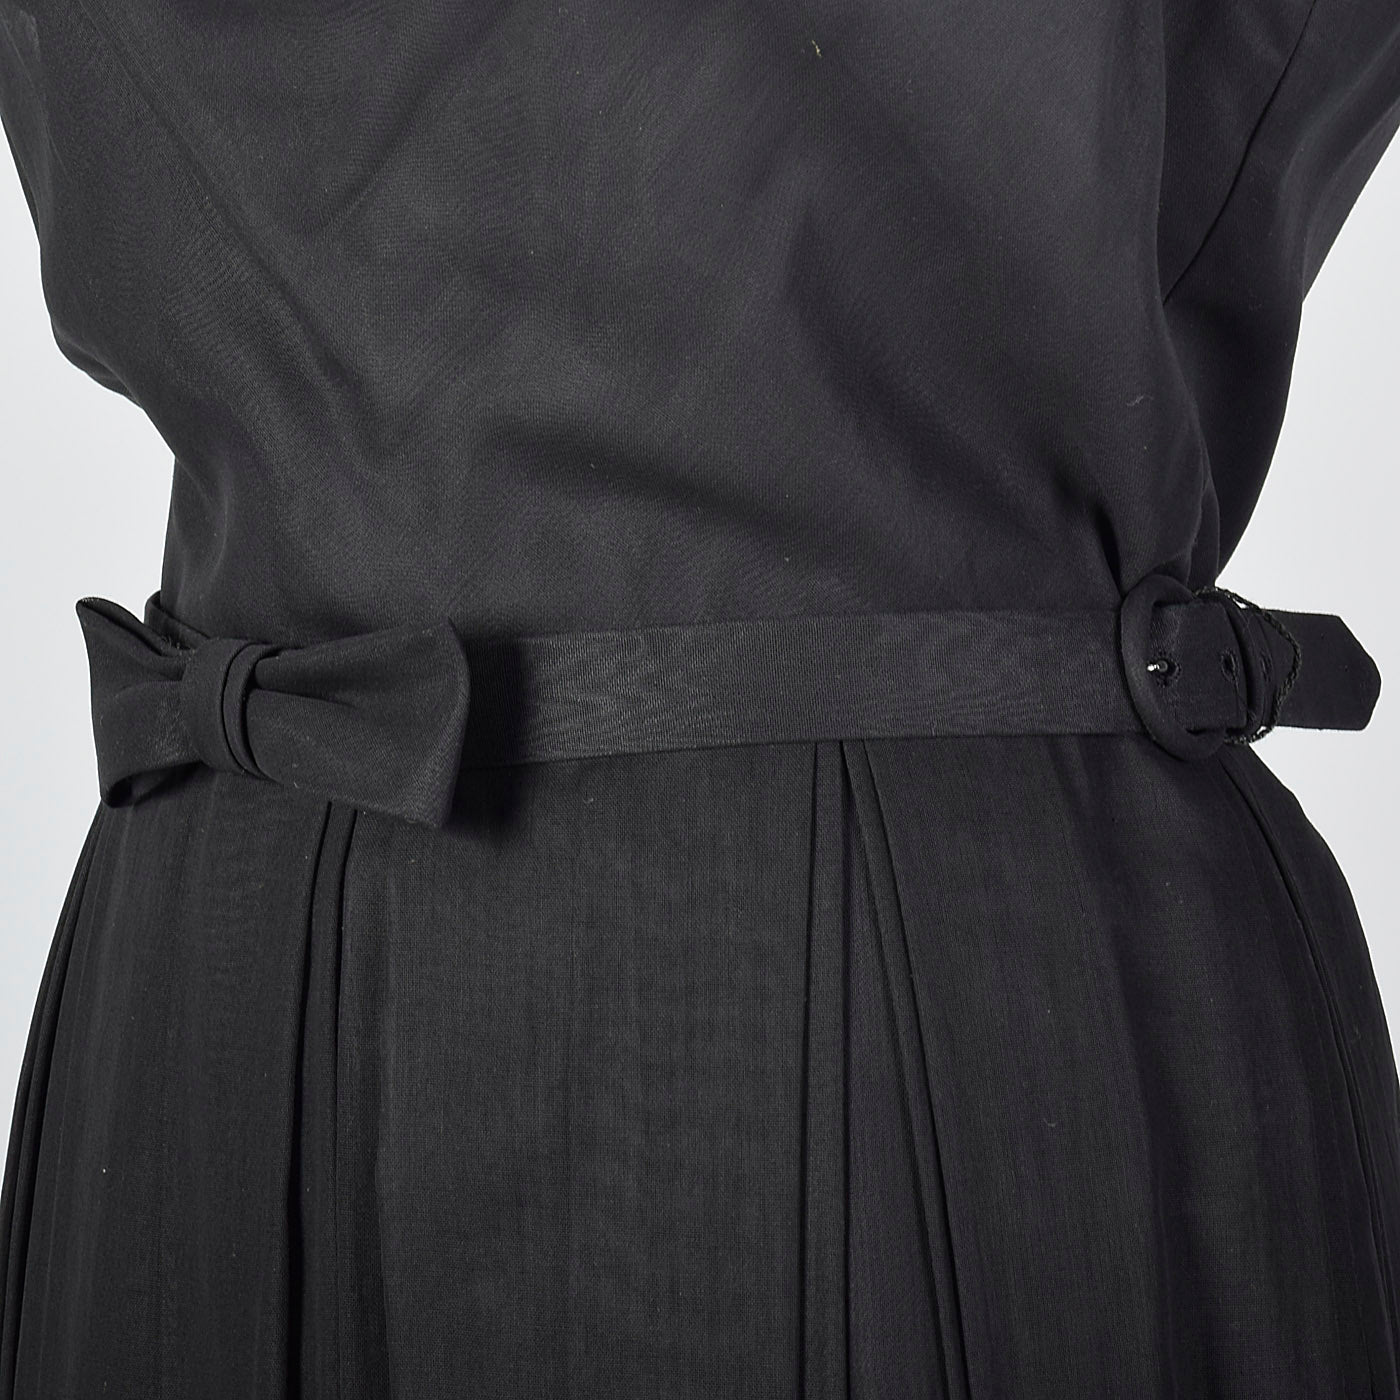 1950s Classic Little Black Dress with Draped Neckline